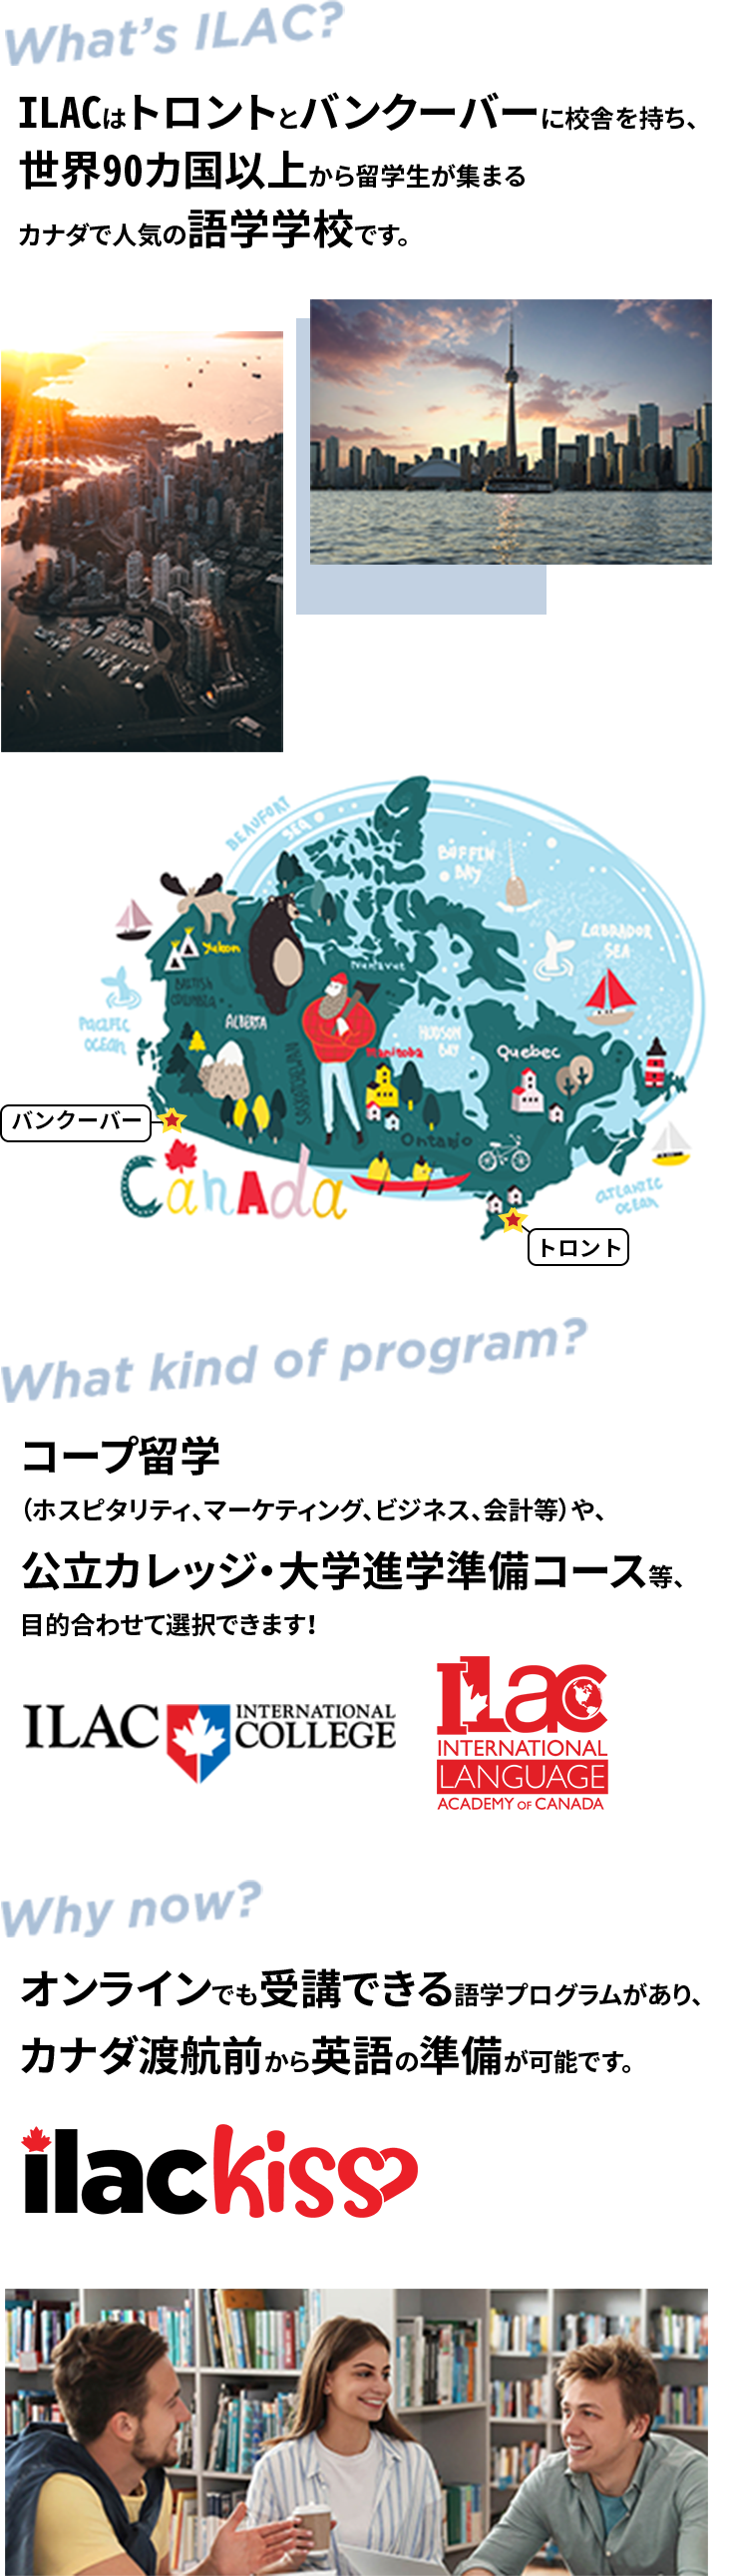 ILAC(International Language Academy of Canada)とは？何を学べる？